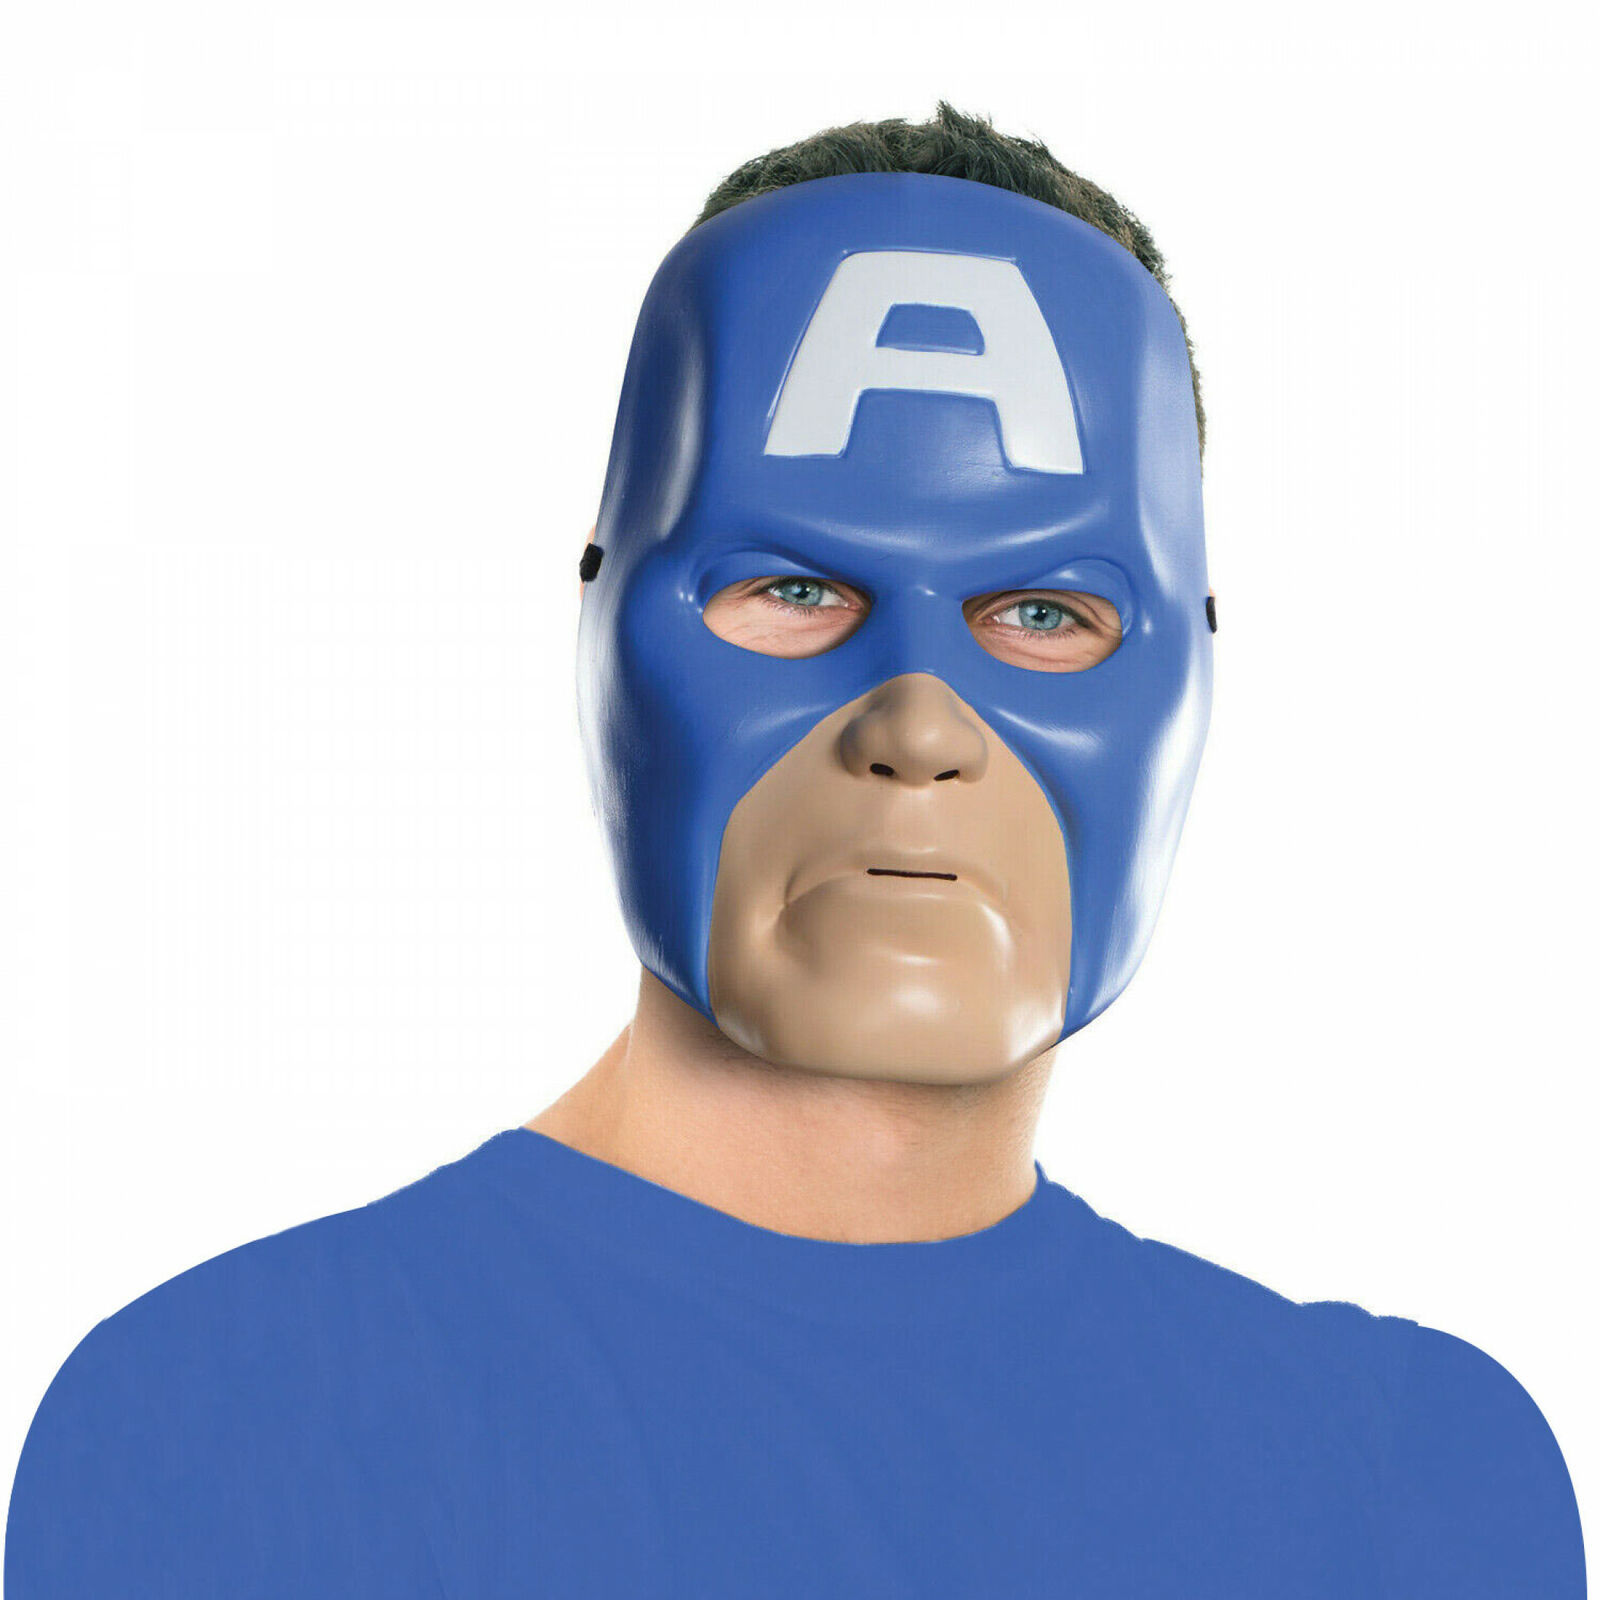 Captain America Vintage Style Ben Cooper Costume Halloween Mask Blue - $20.98